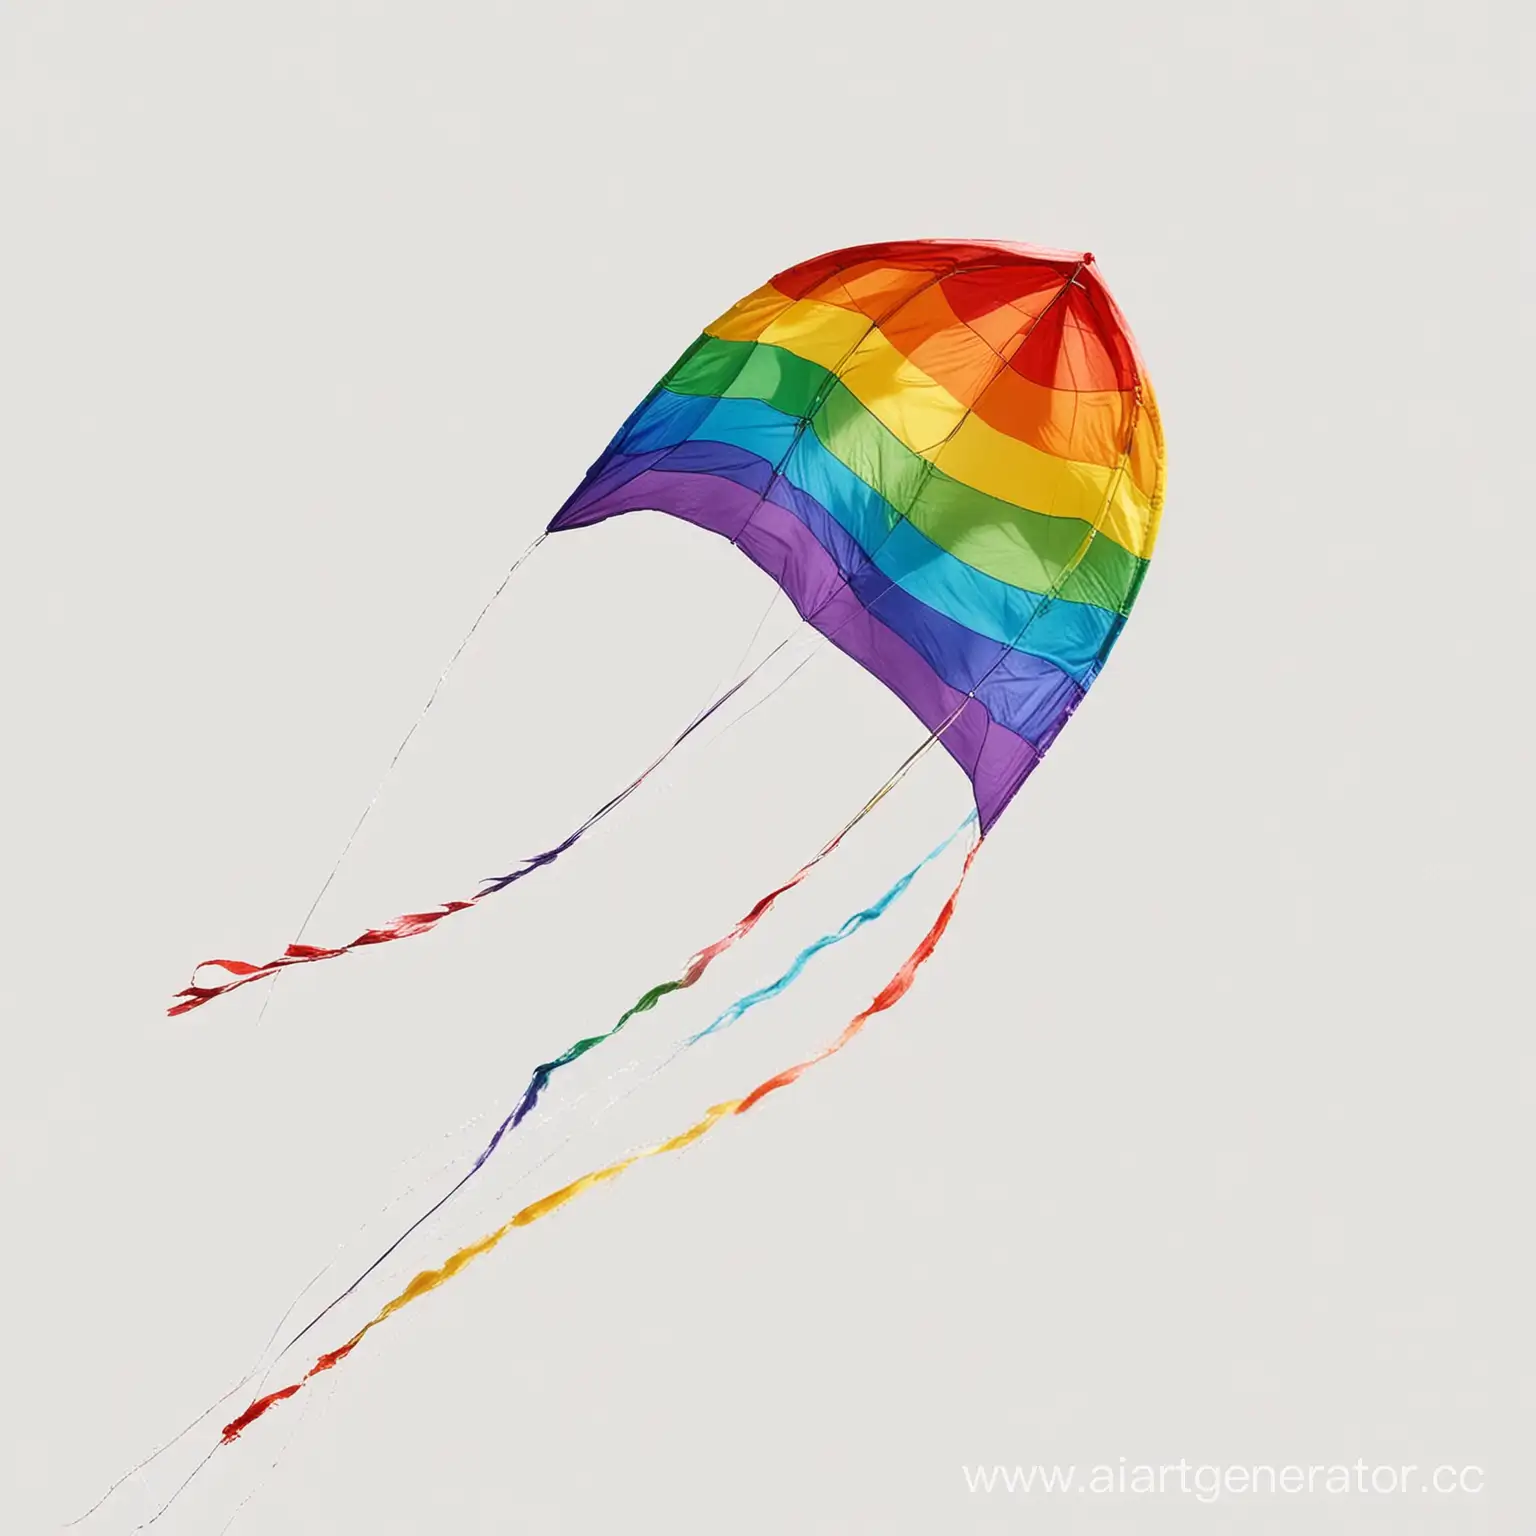 Summer-Kite-Soaring-in-Vivid-Rainbow-Hues-on-Pristine-White-Background